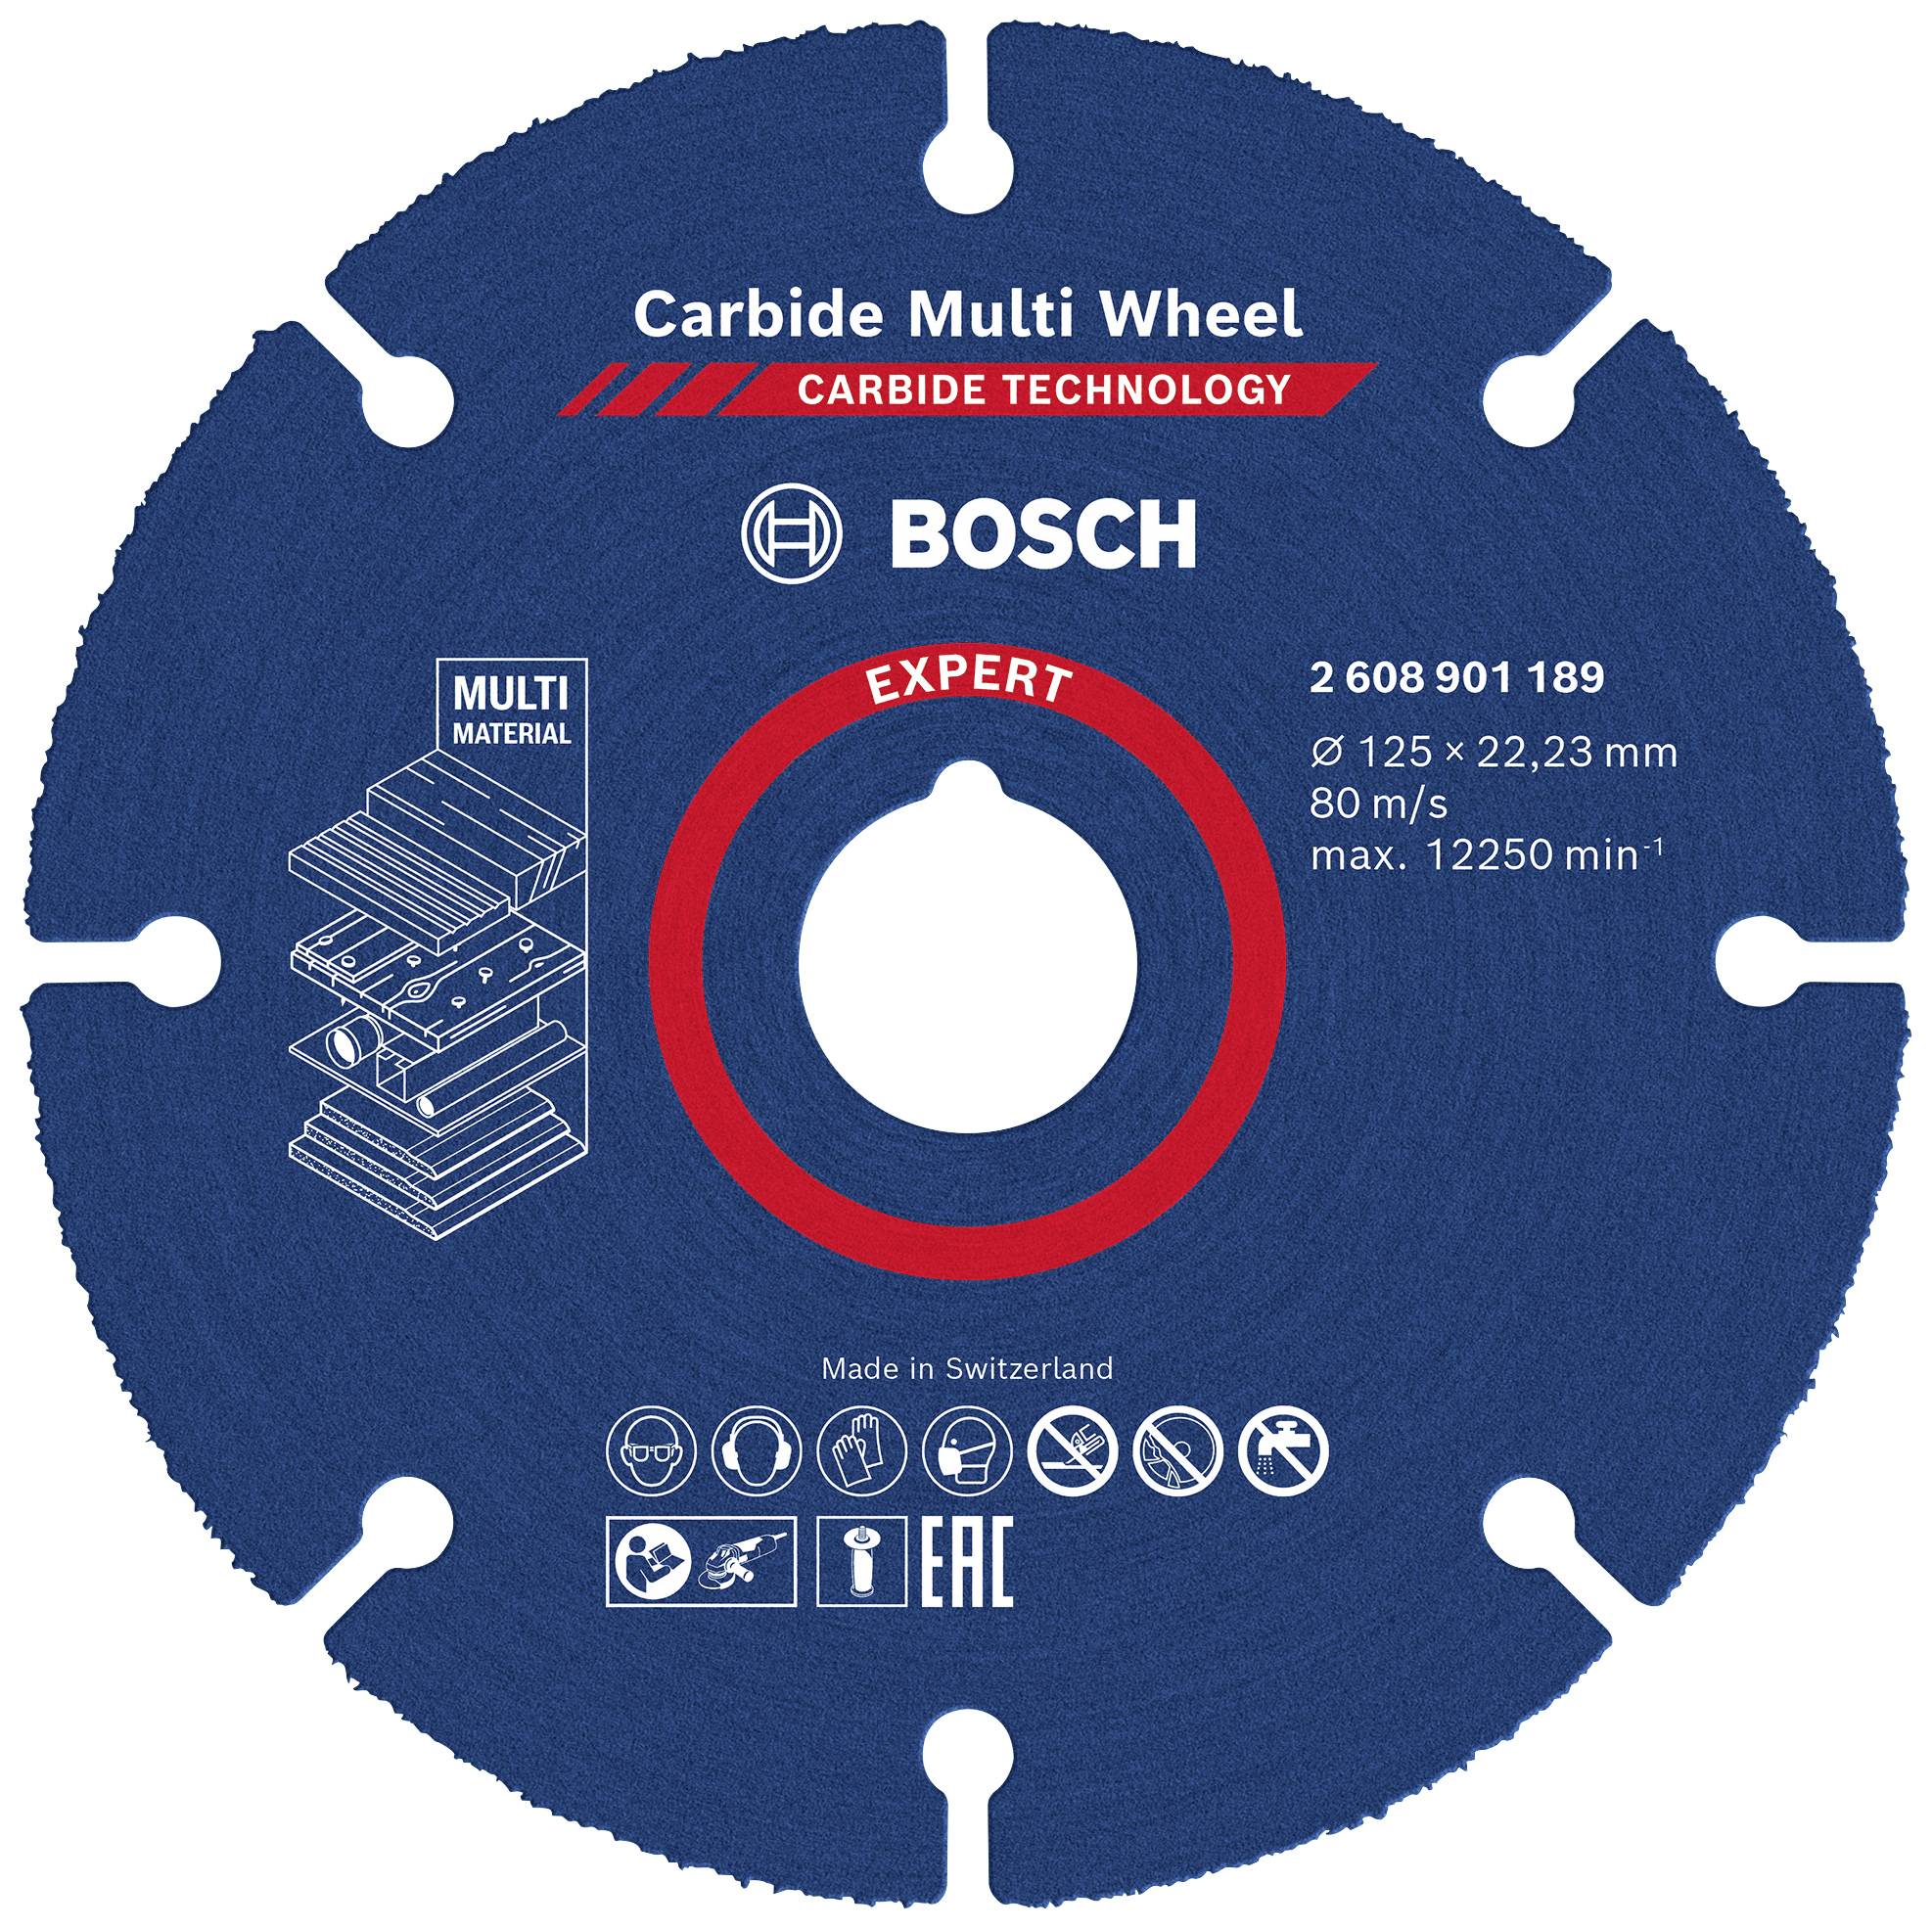 BOSCH Accessories EXPERT Carbide Multi Wheel 2608901189 Trennscheibe gerade 1 Stück 125 mm 22.2